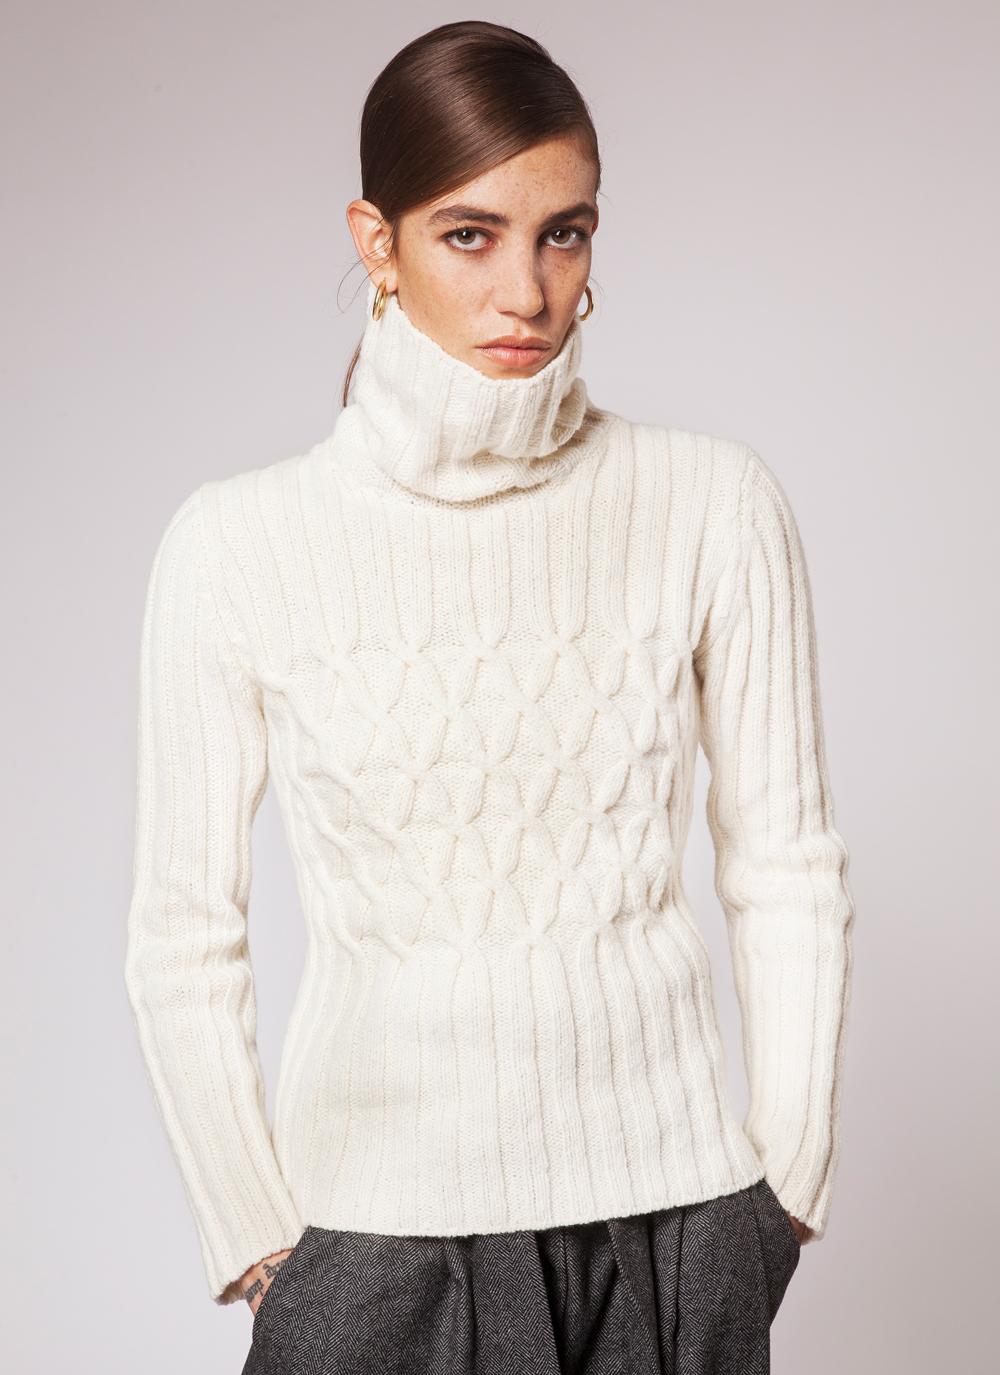 Wool Cashmere Aran Cable Sweater, Fisherman sweater woman